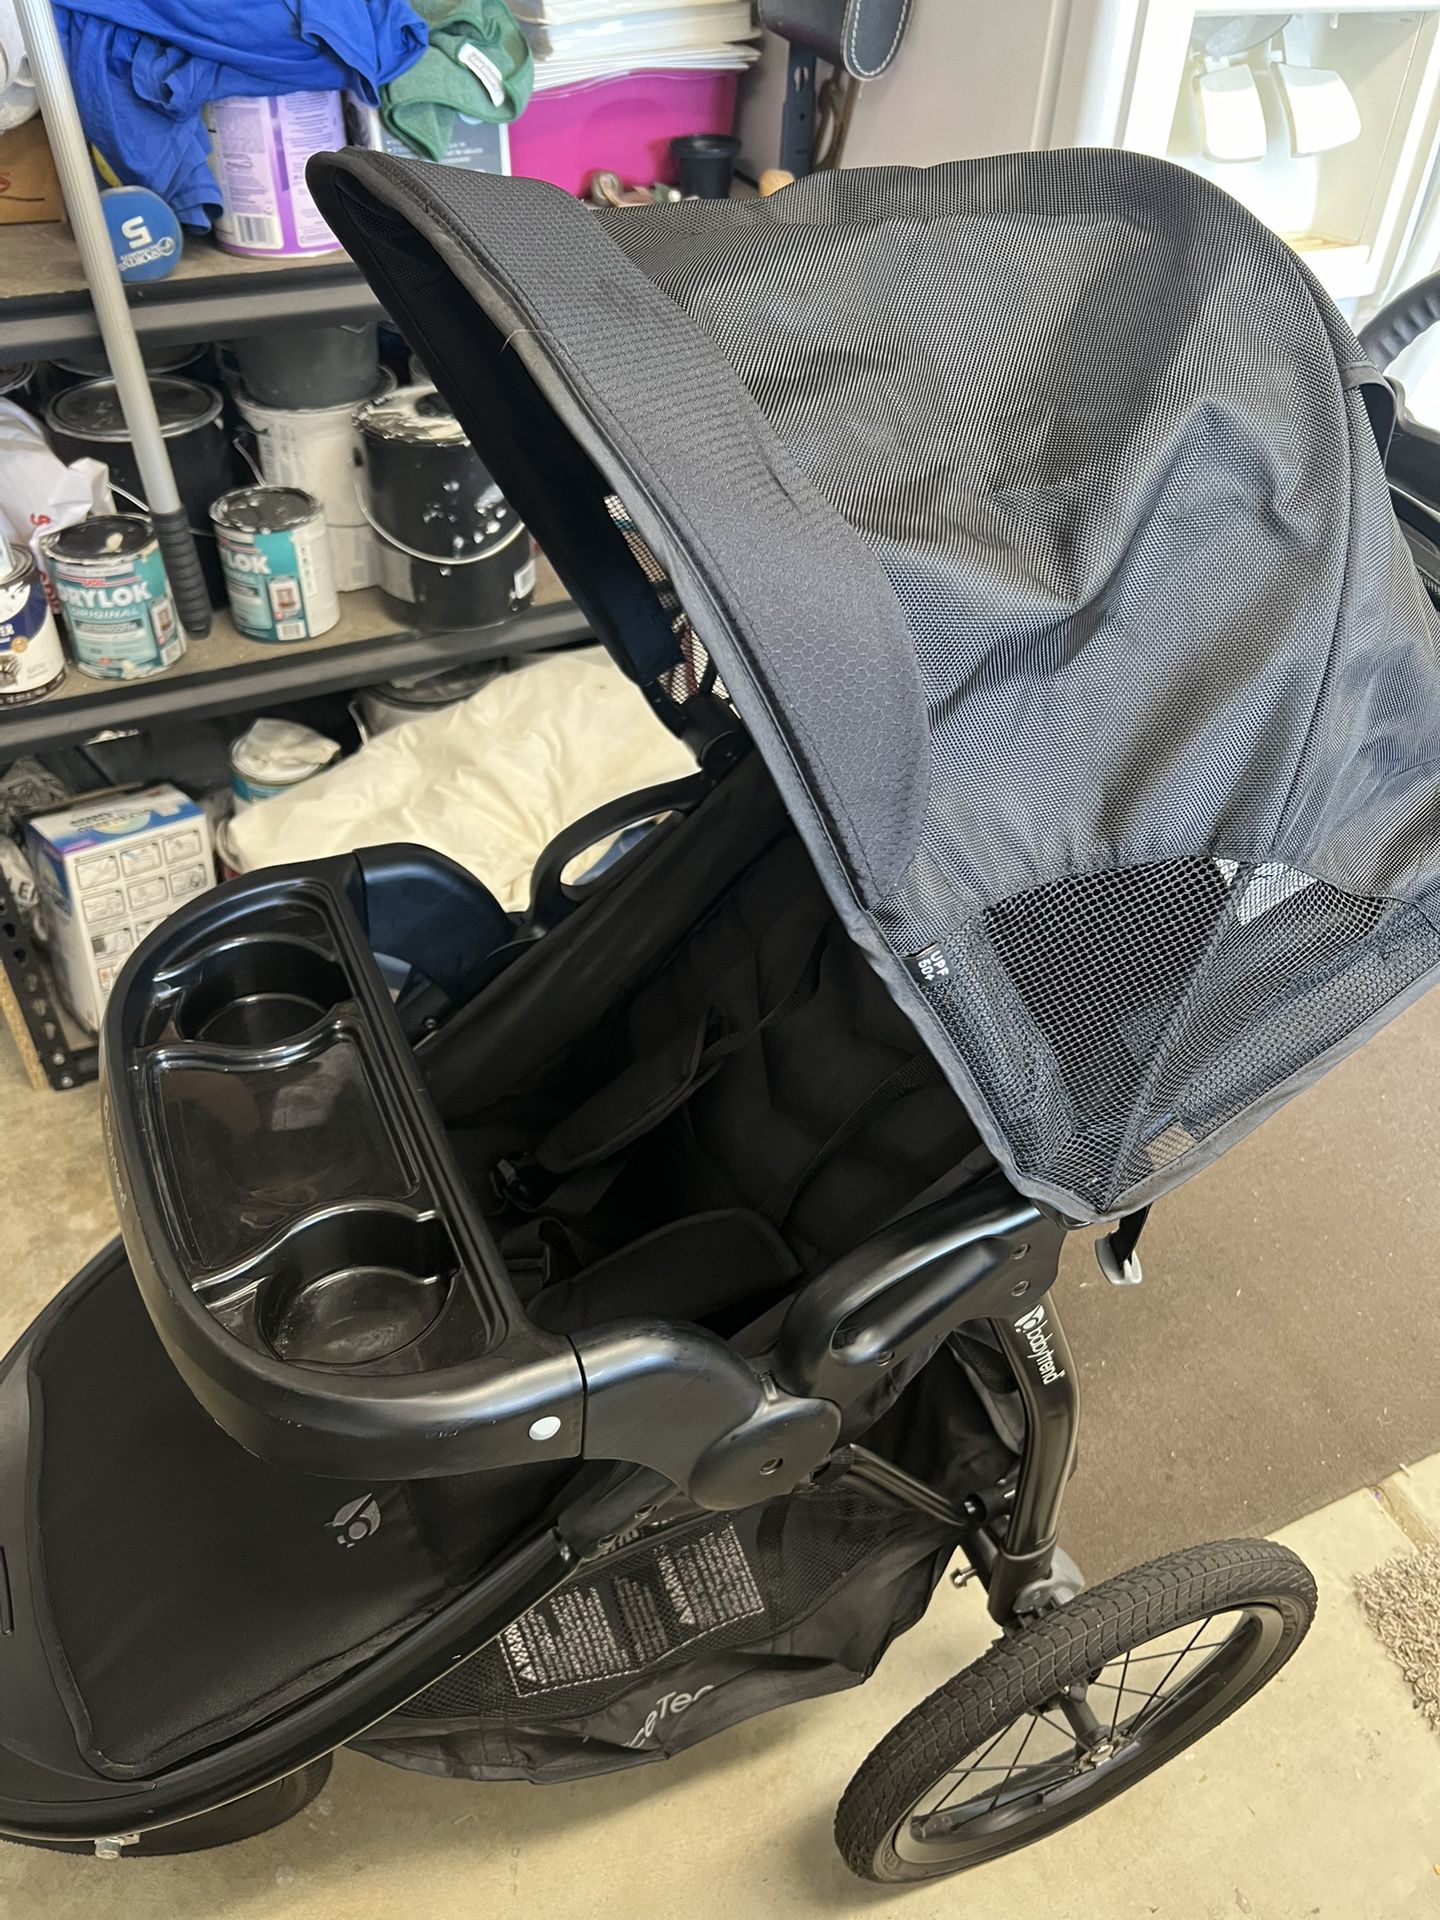 Baby Trend Black Jogger Stroller